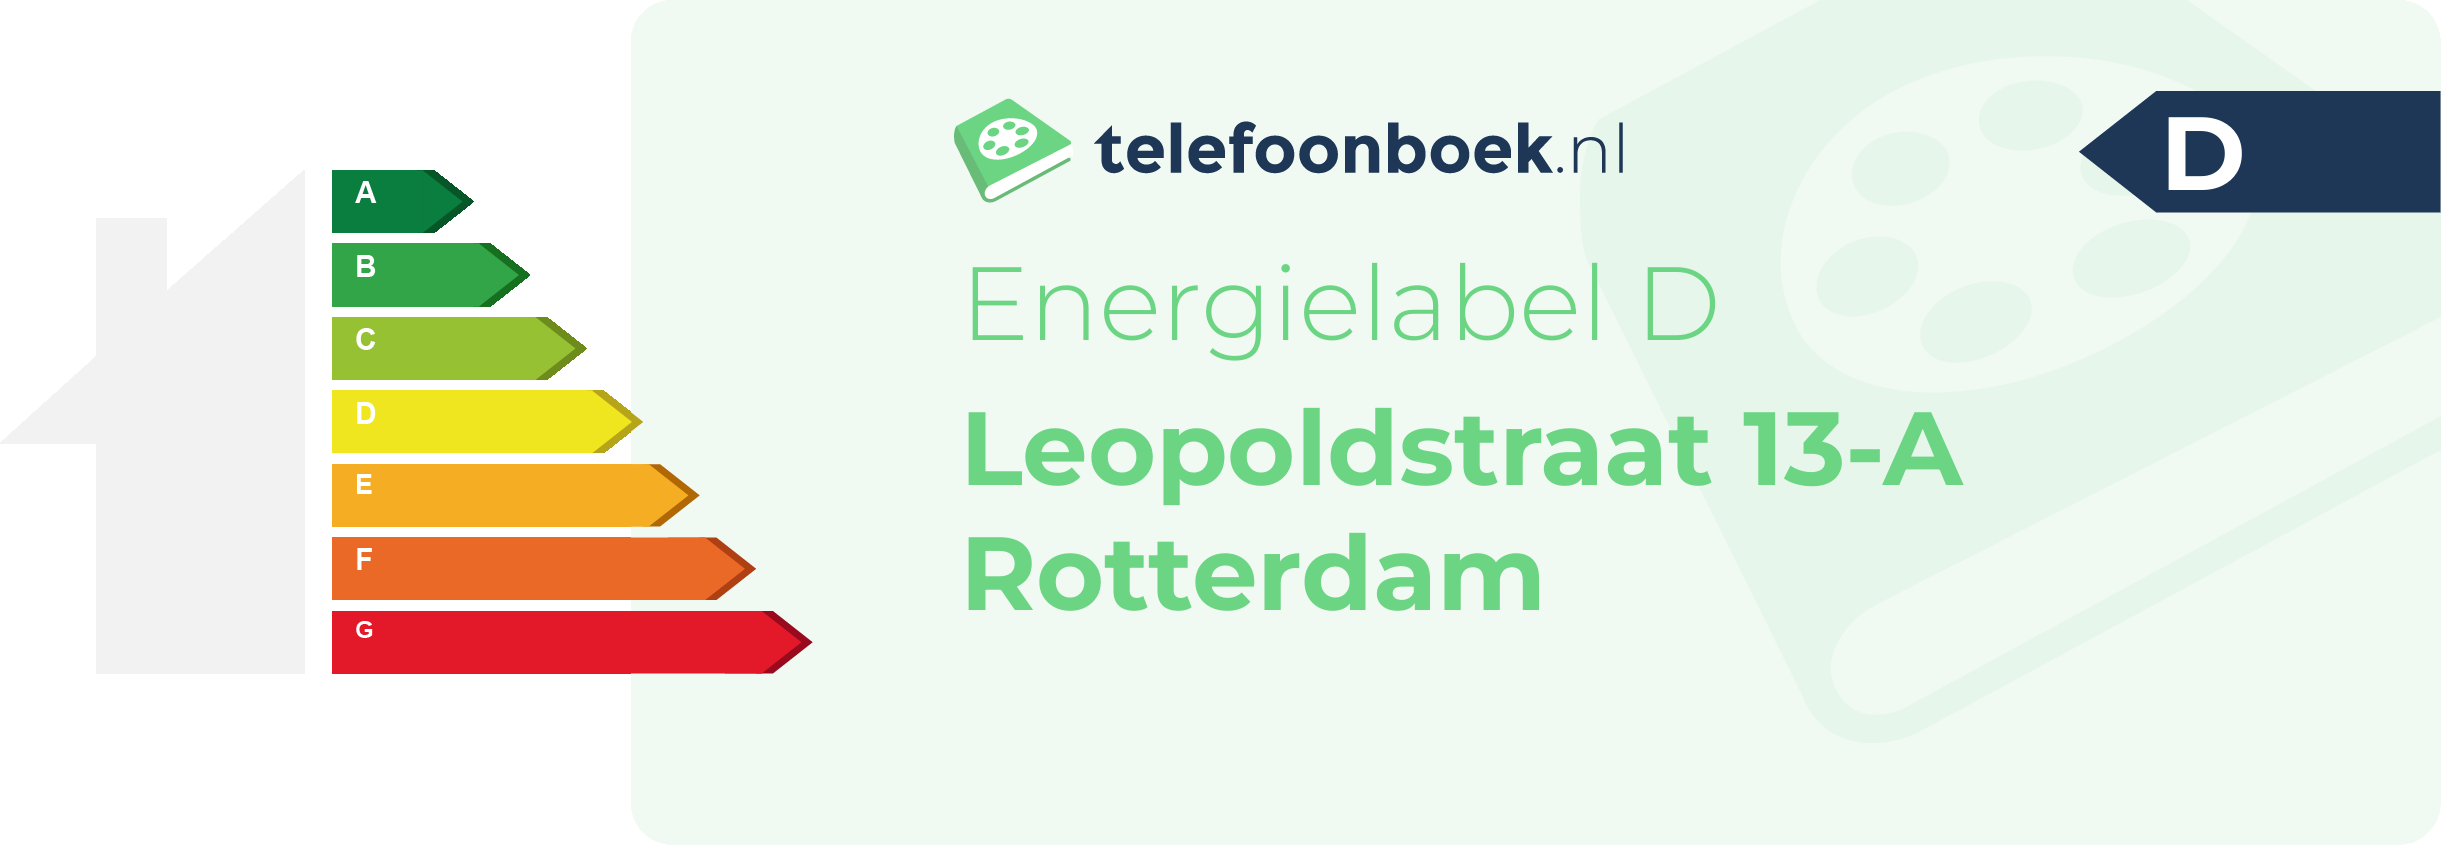 Energielabel Leopoldstraat 13-A Rotterdam